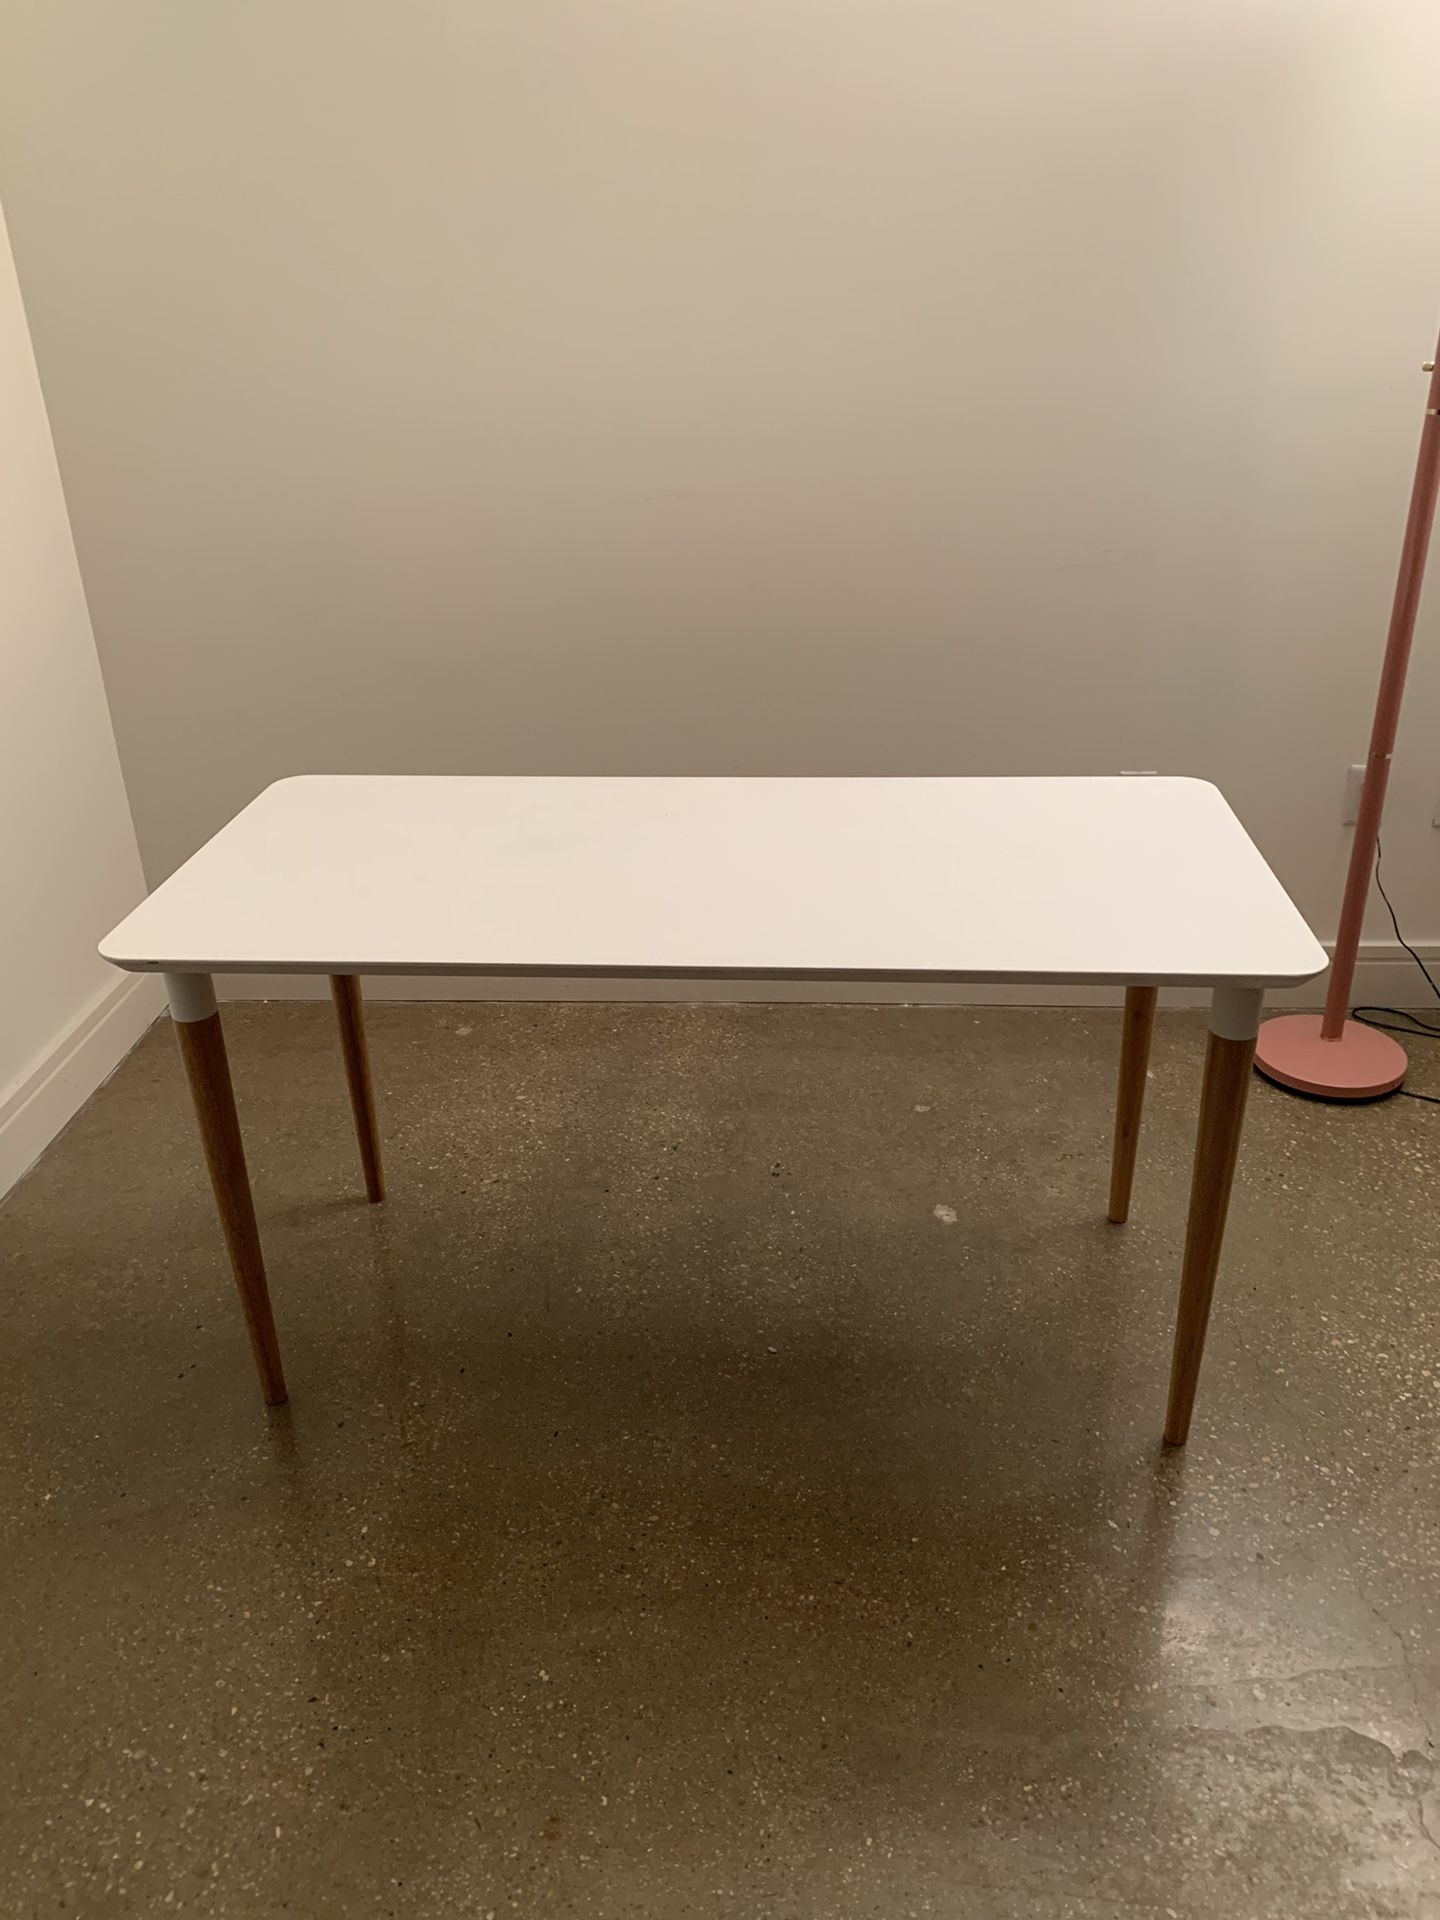 IKEA desk/kitchen table for sale